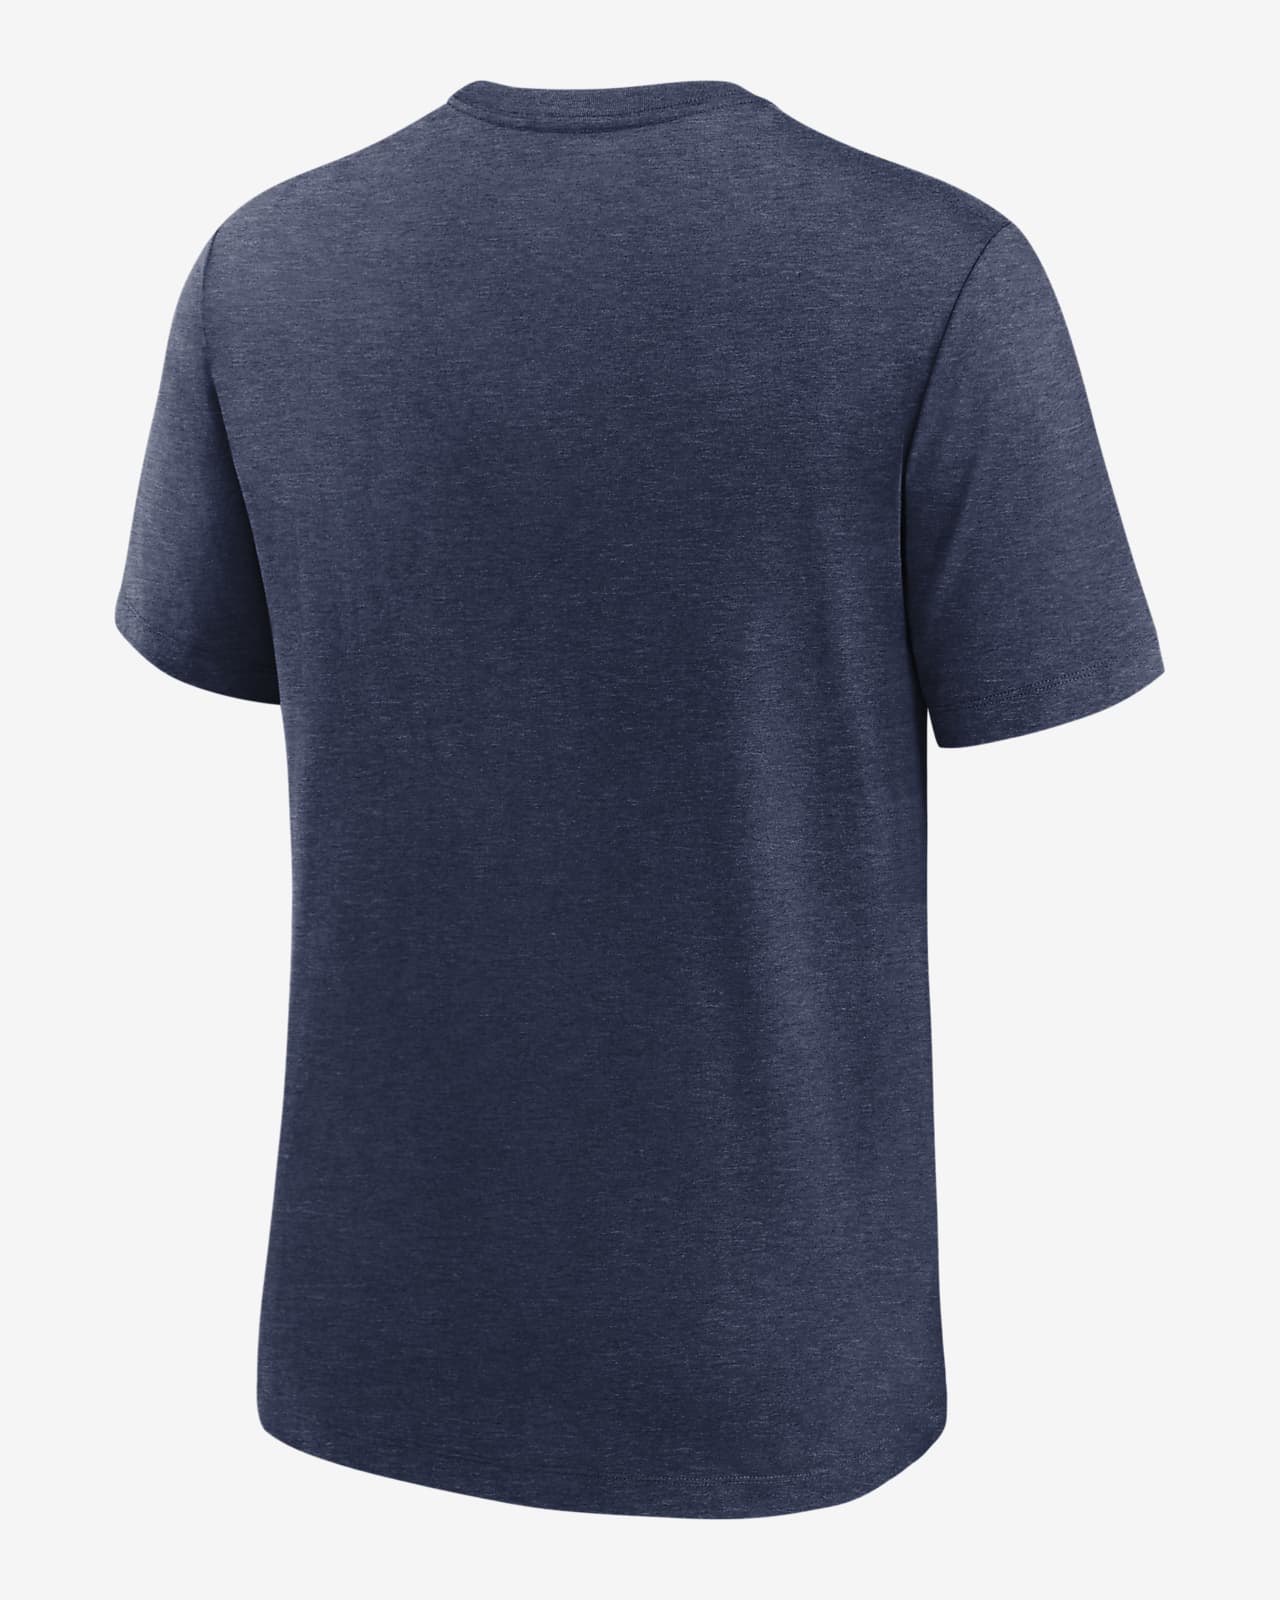 Nike Dri-FIT Early Work (MLB Atlanta Braves) Men's T-Shirt.